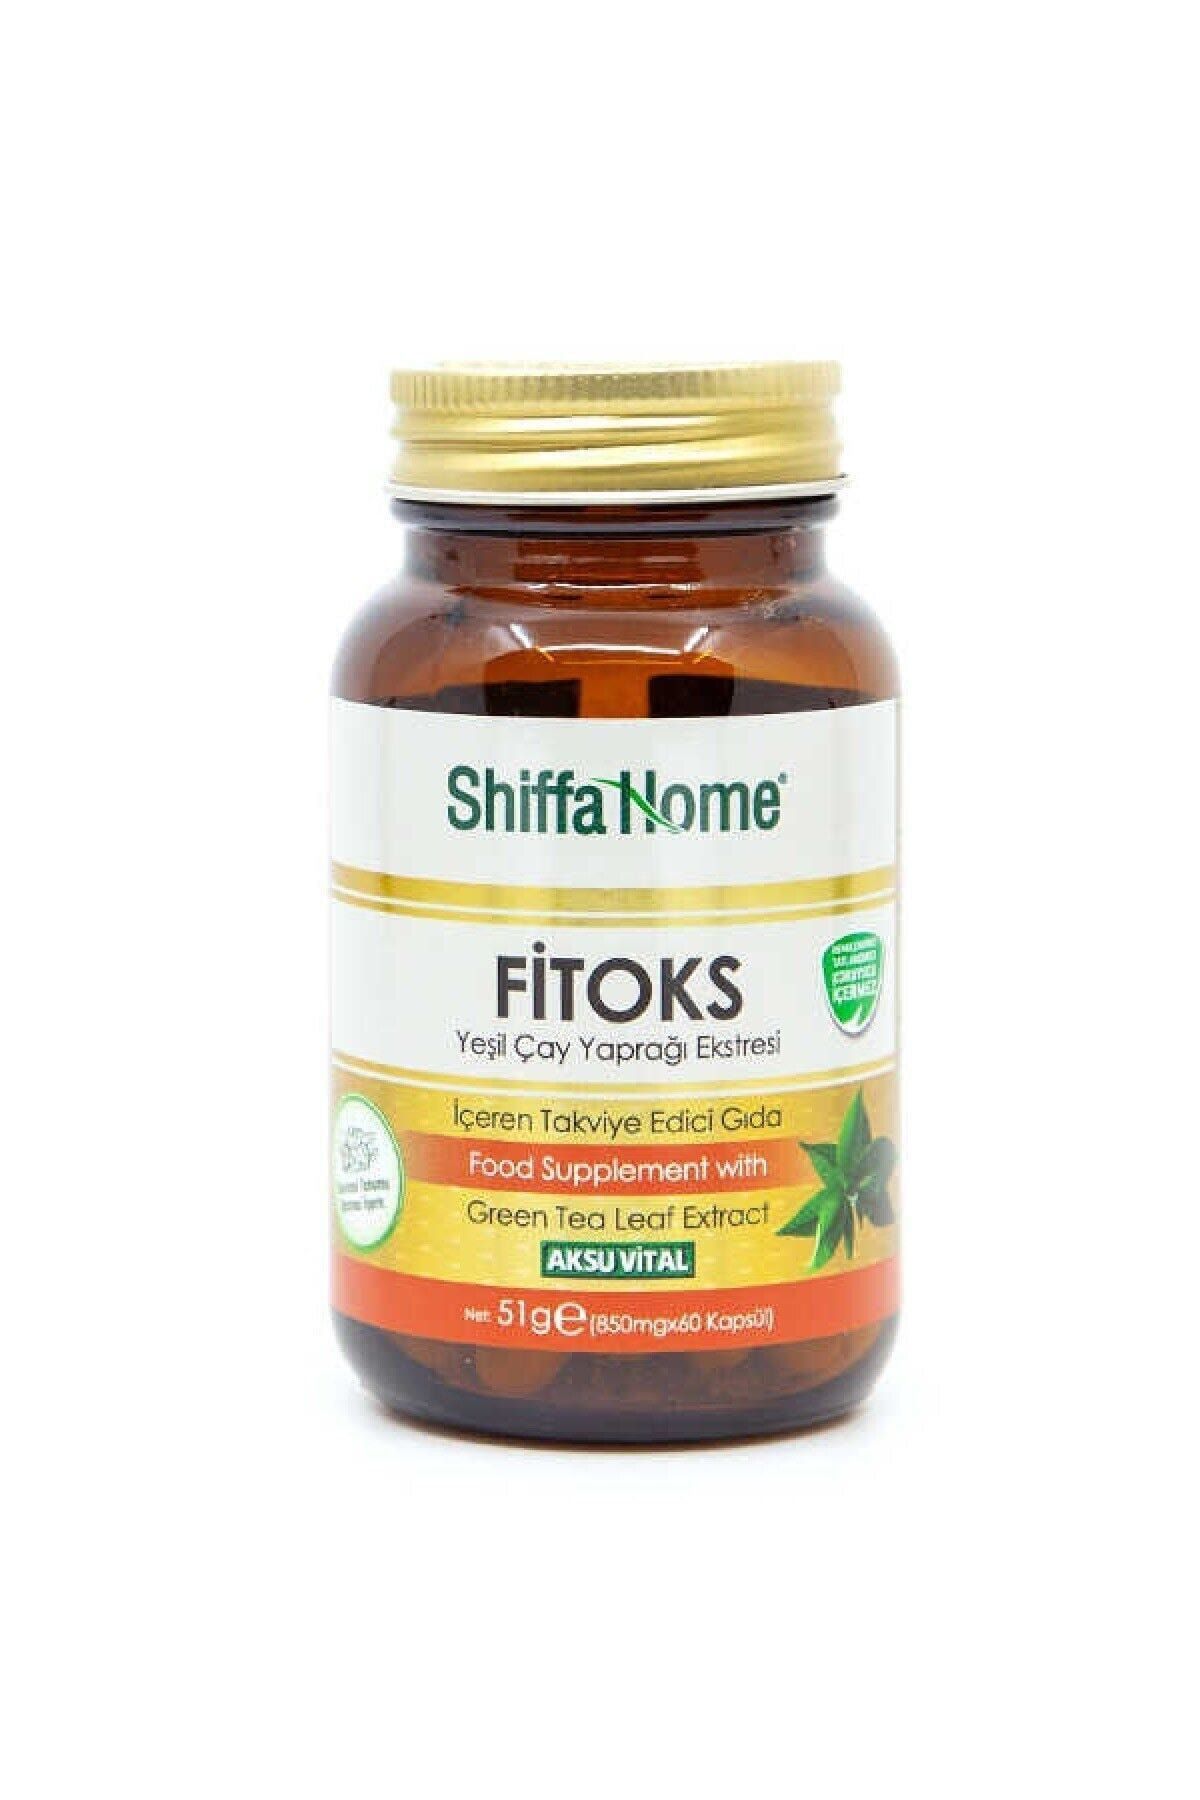 Shiffa Home Fitoks Yeşil Çay Yaprağı Ekstresi 860 Mg. 60 Kapsül Aksu Vital